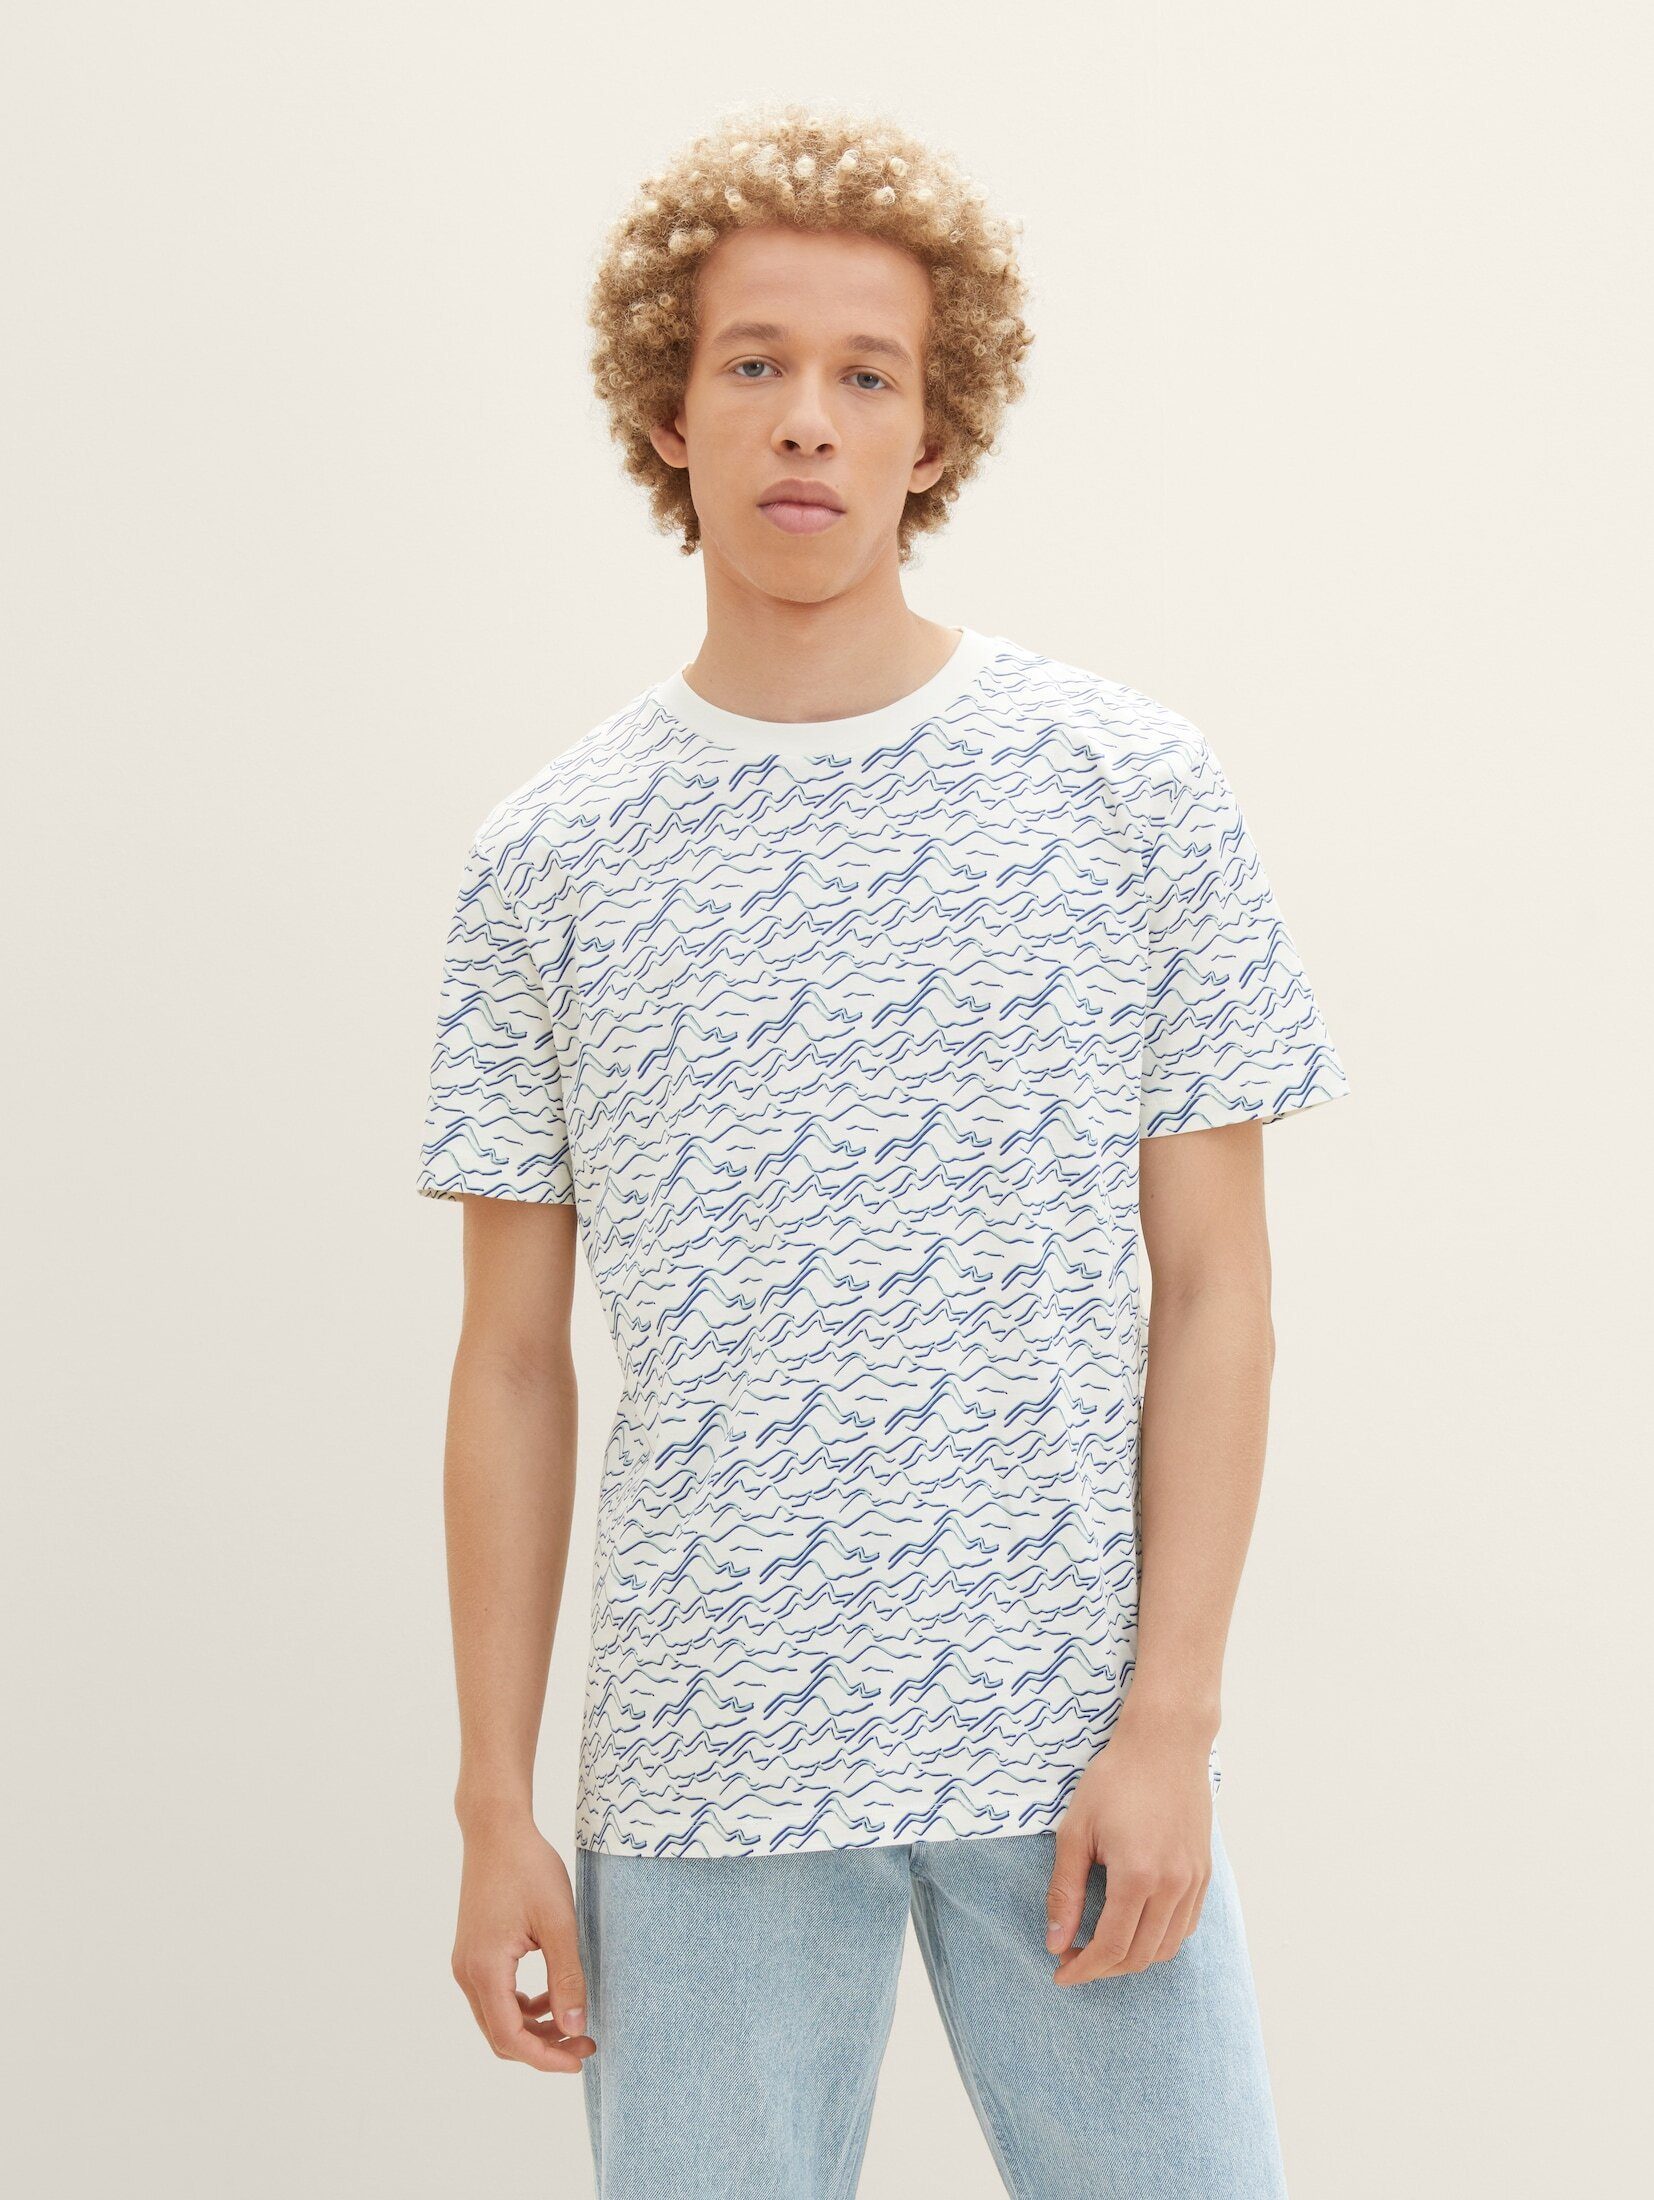 TOM TAILOR Denim T-Shirt T-Shirt mit Allover-Print white abstract mountain print